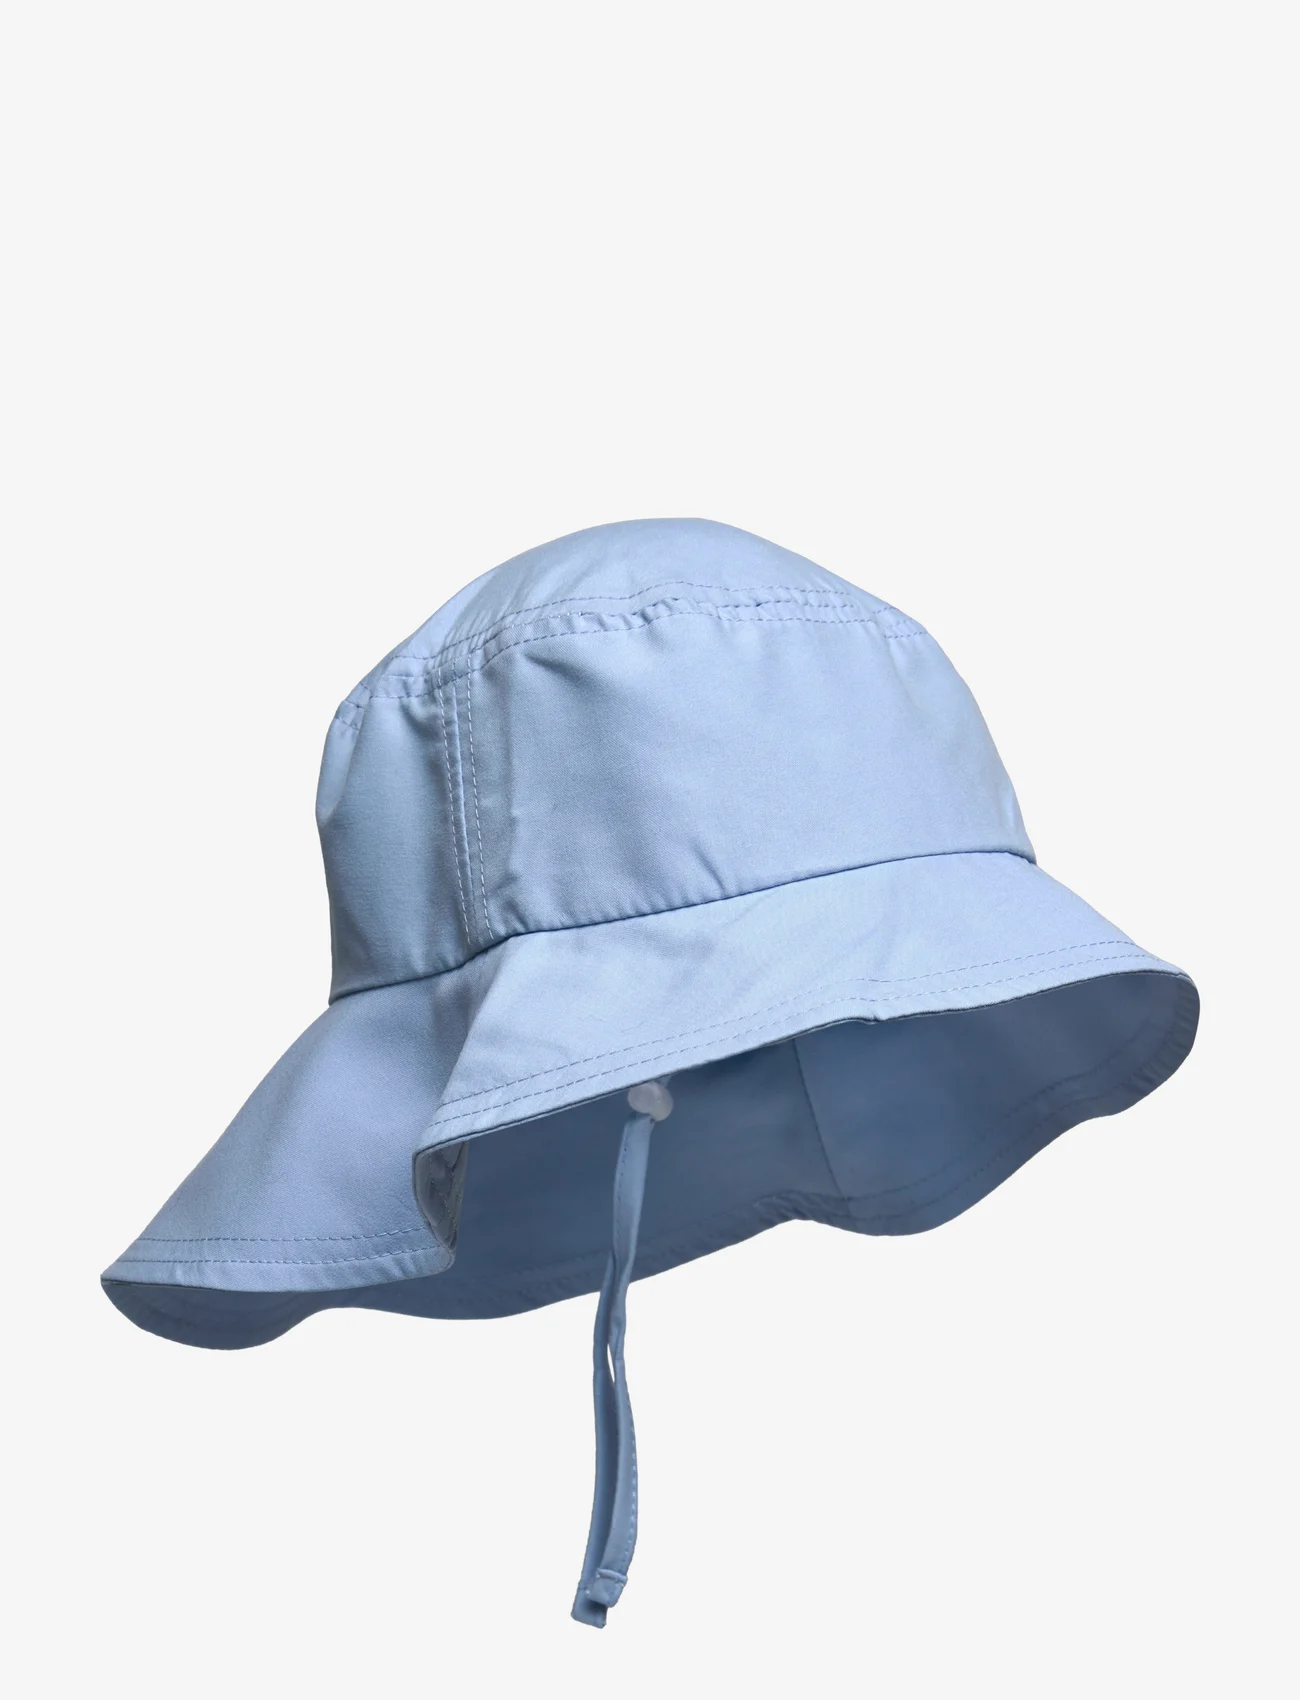 Reima - Sunhat, Rantsu - hats - frozen blue - 0